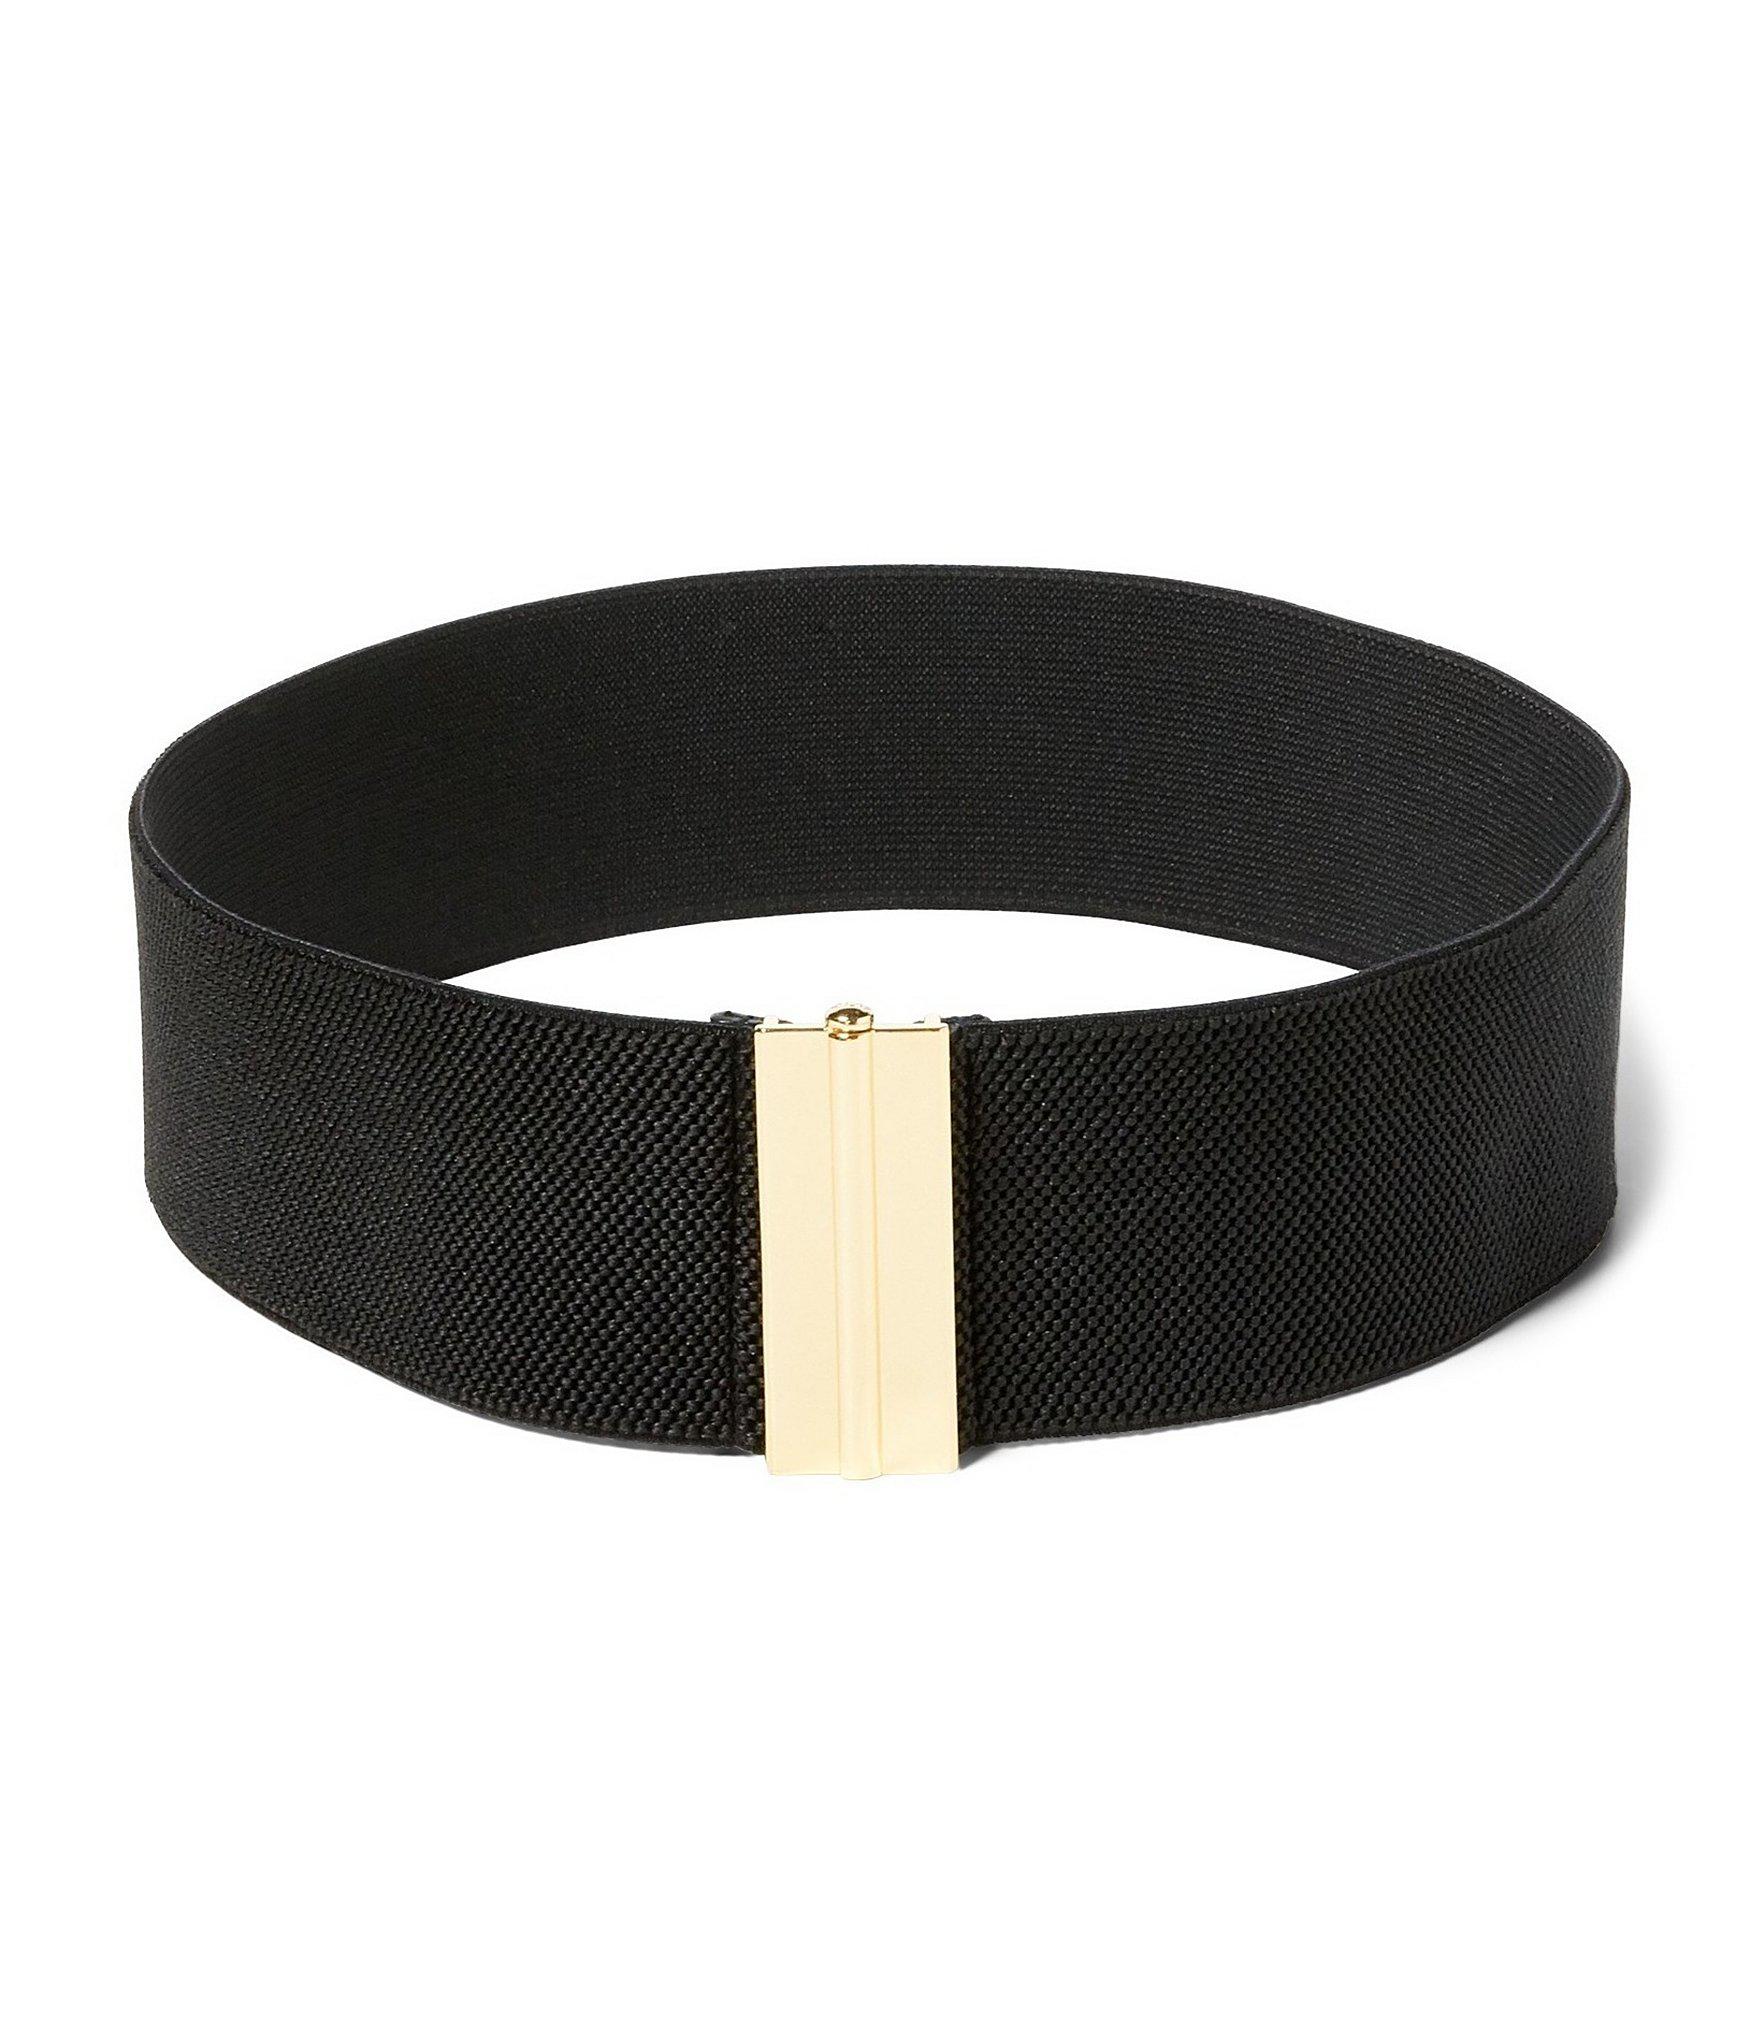 Lyst - Lauren by Ralph Lauren Interlock Stretch Belt in Black